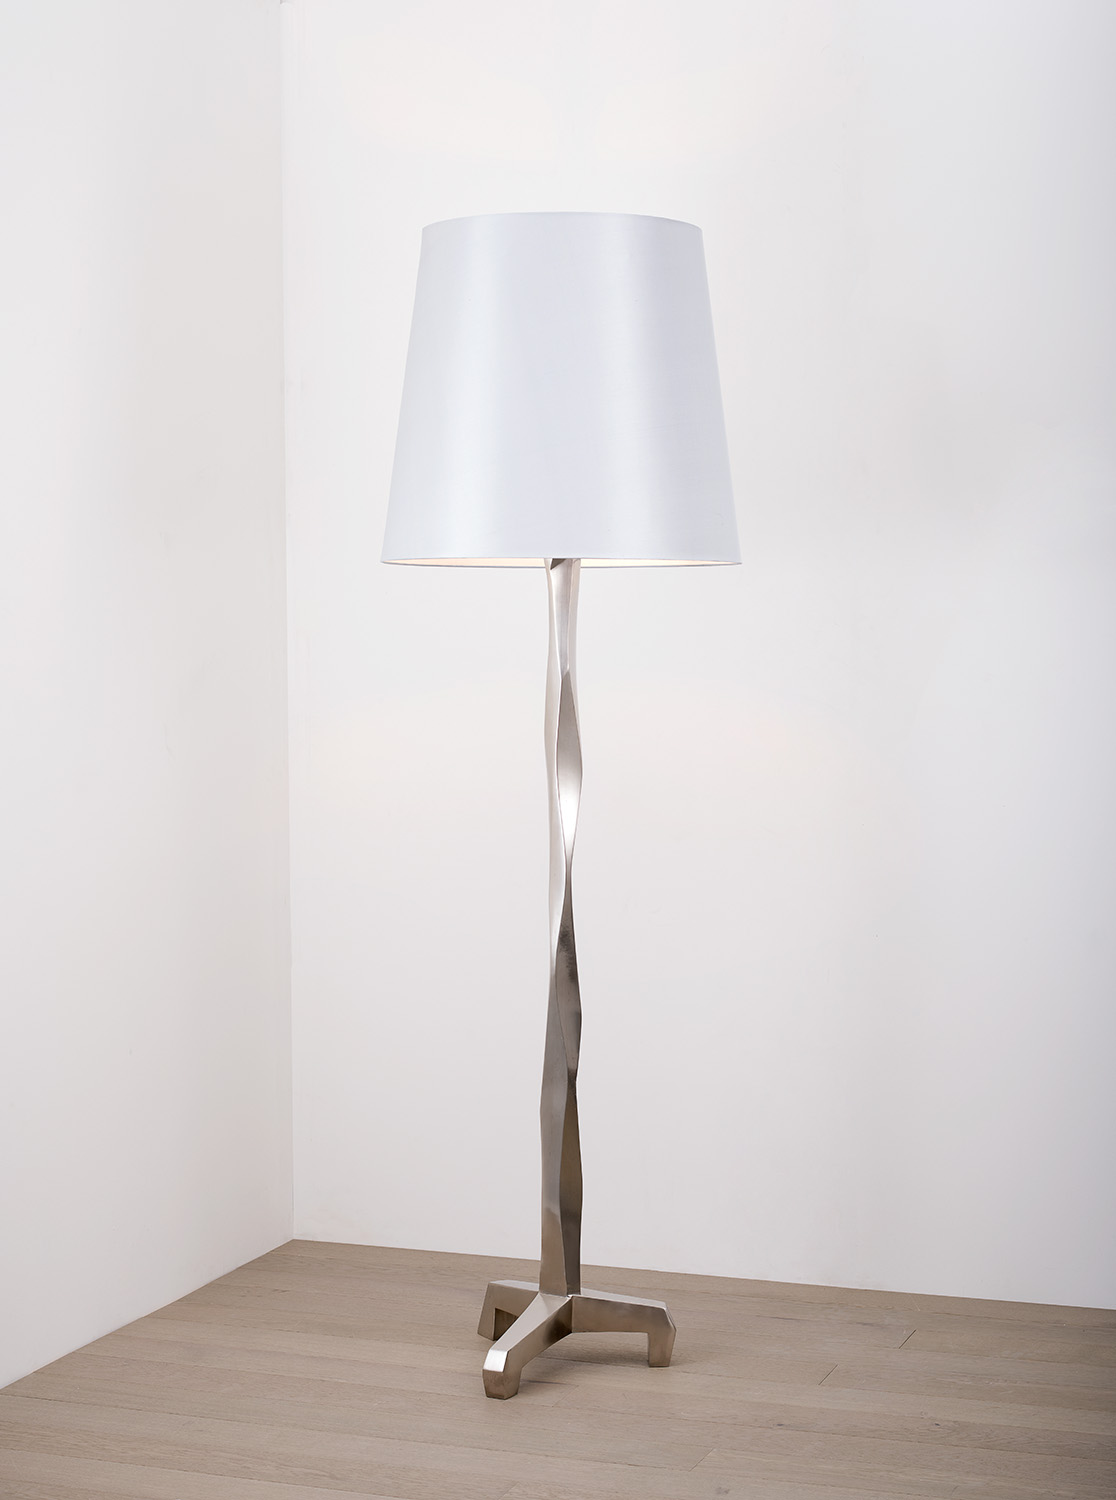 2. B&G Standard Lamp 'Masai'.jpg